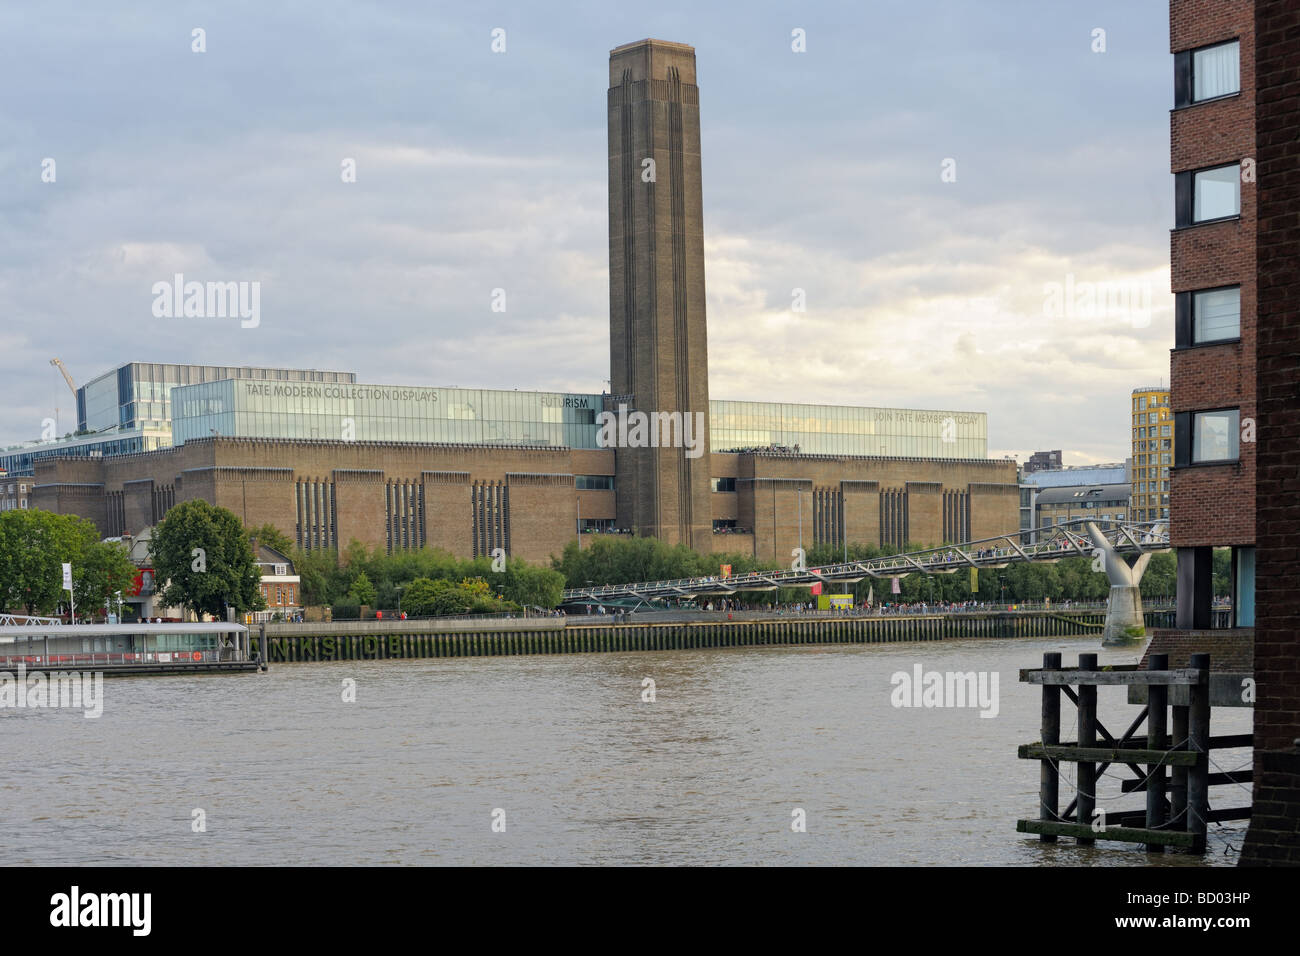 Tate Modern, national museum of international modern art, the disused Bankside power station, London, England, UK, Europe Stock Photo